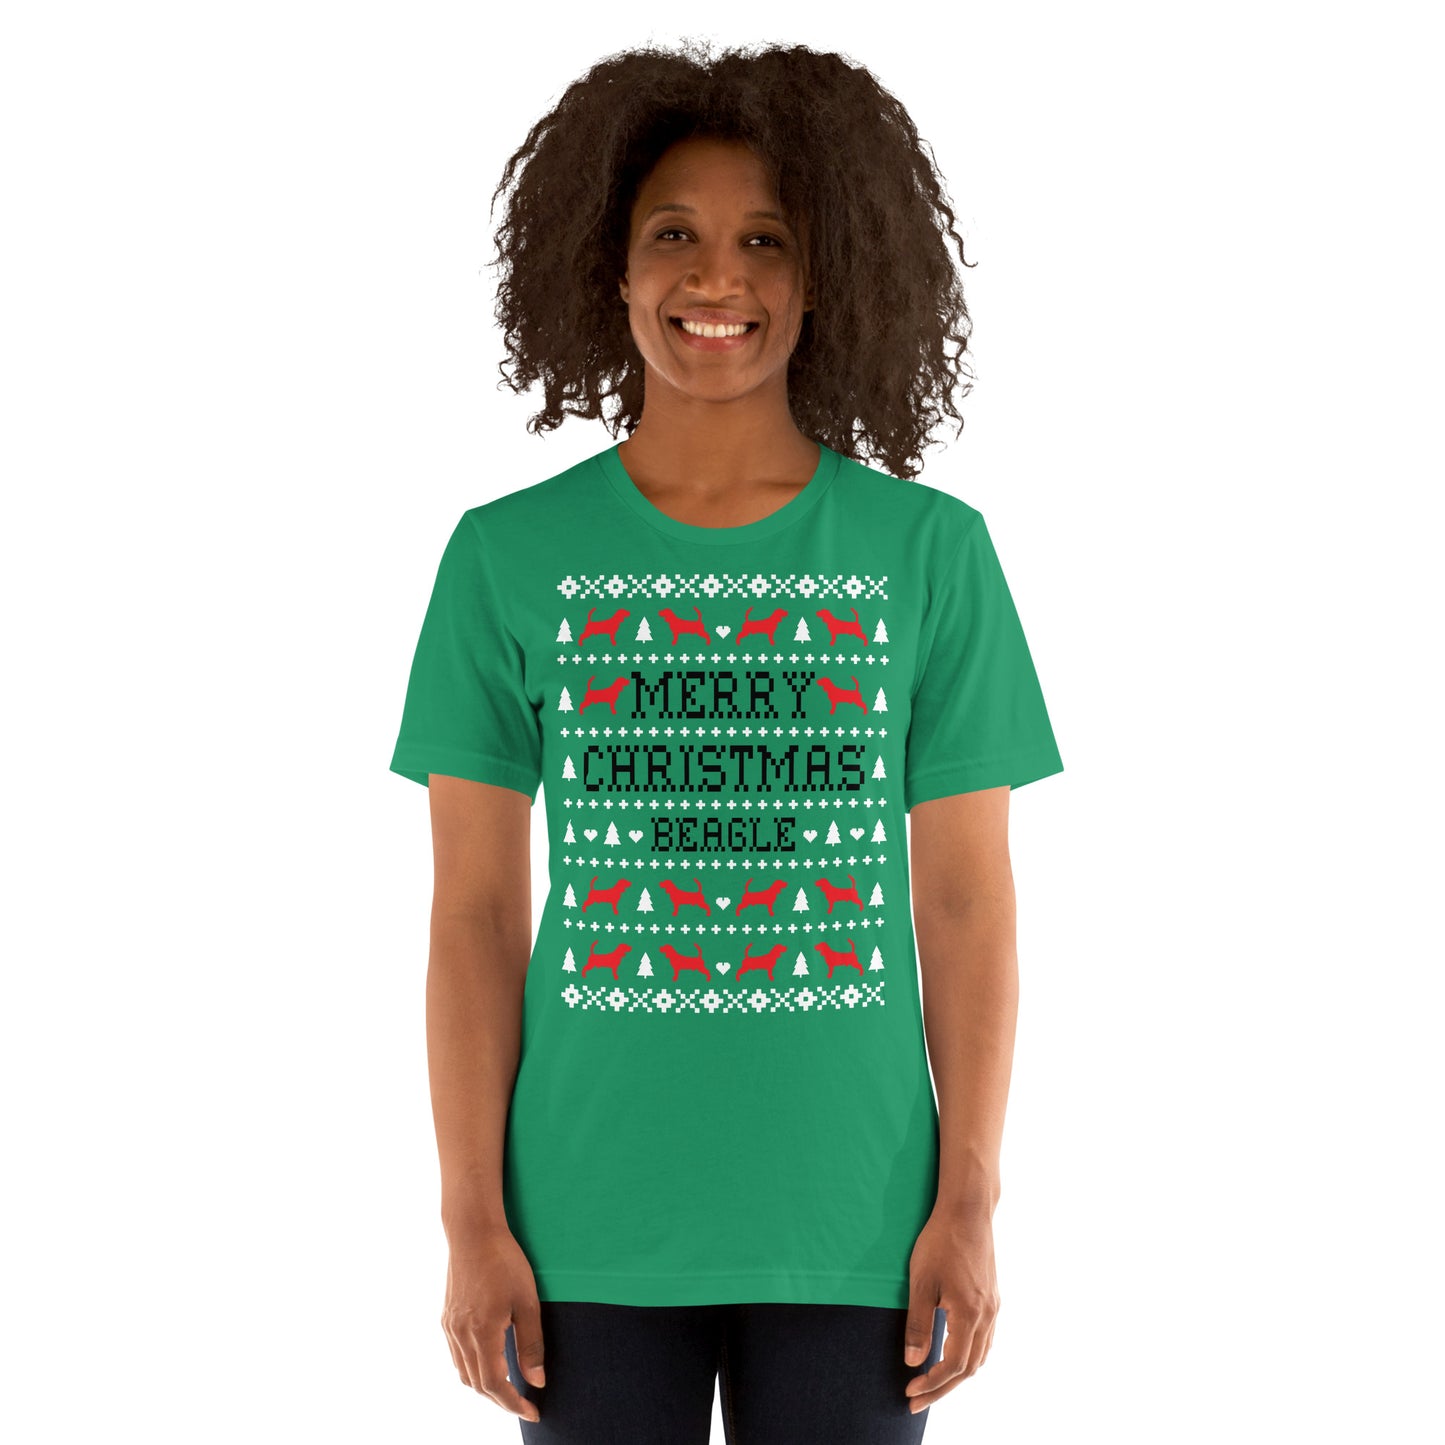 Beagle Ugly Christmas t-shirt green by Dog Artistry.